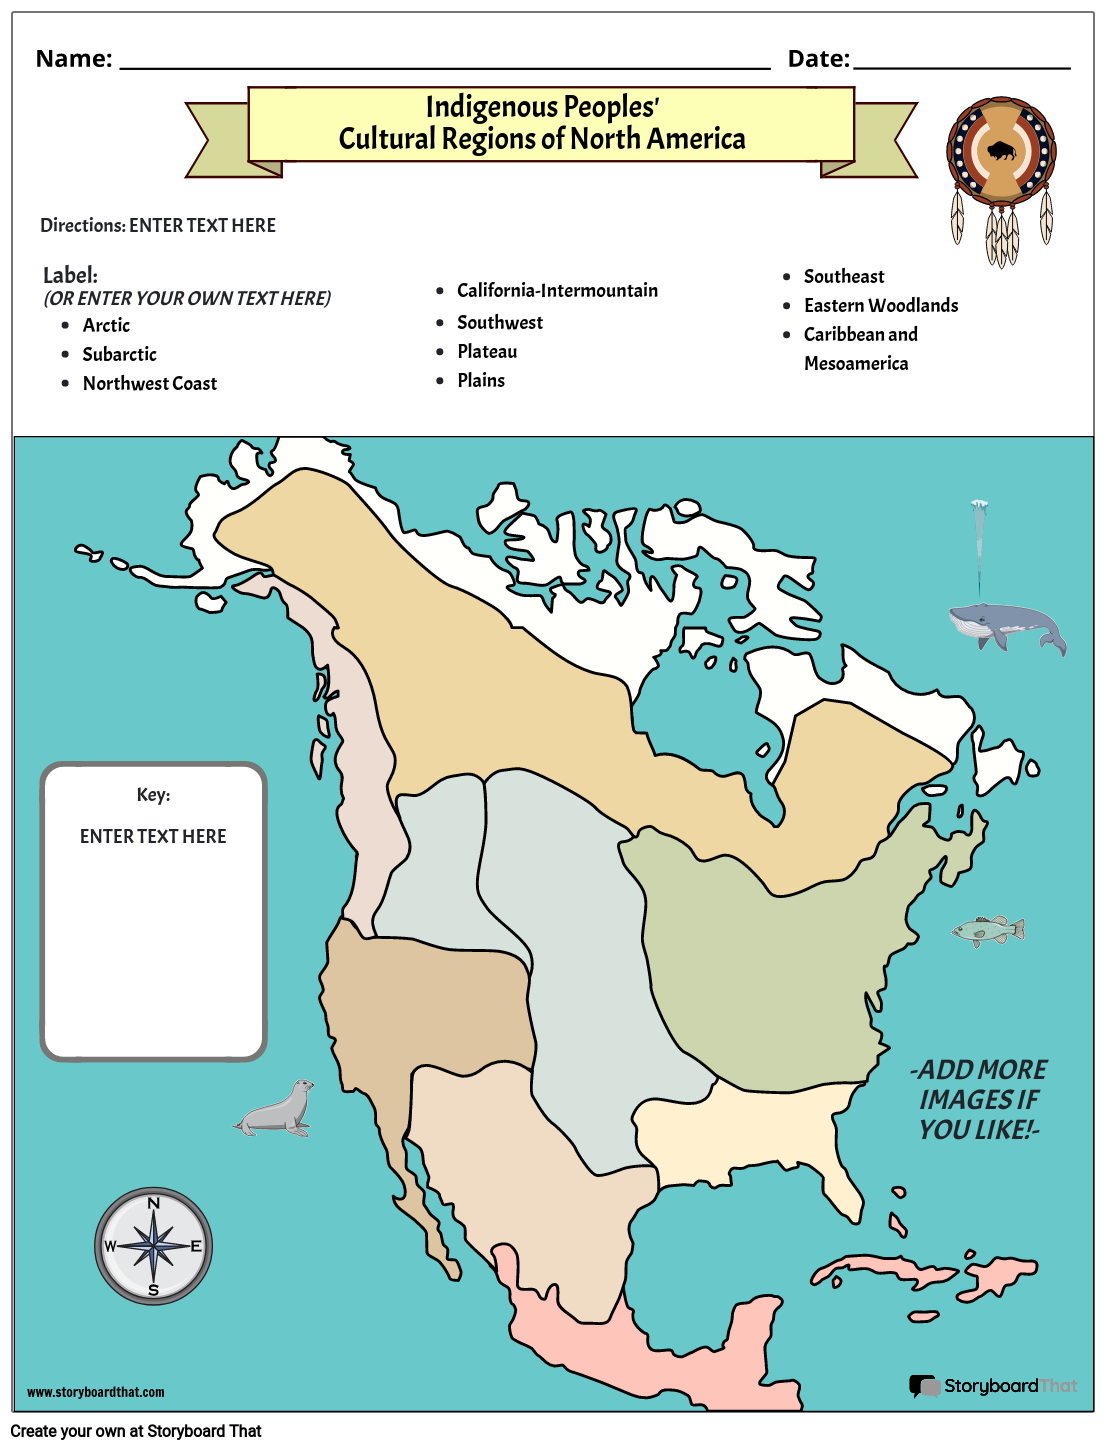 मूल अमेरिकी सांस्कृतिक क्षेत्र का नक्शा